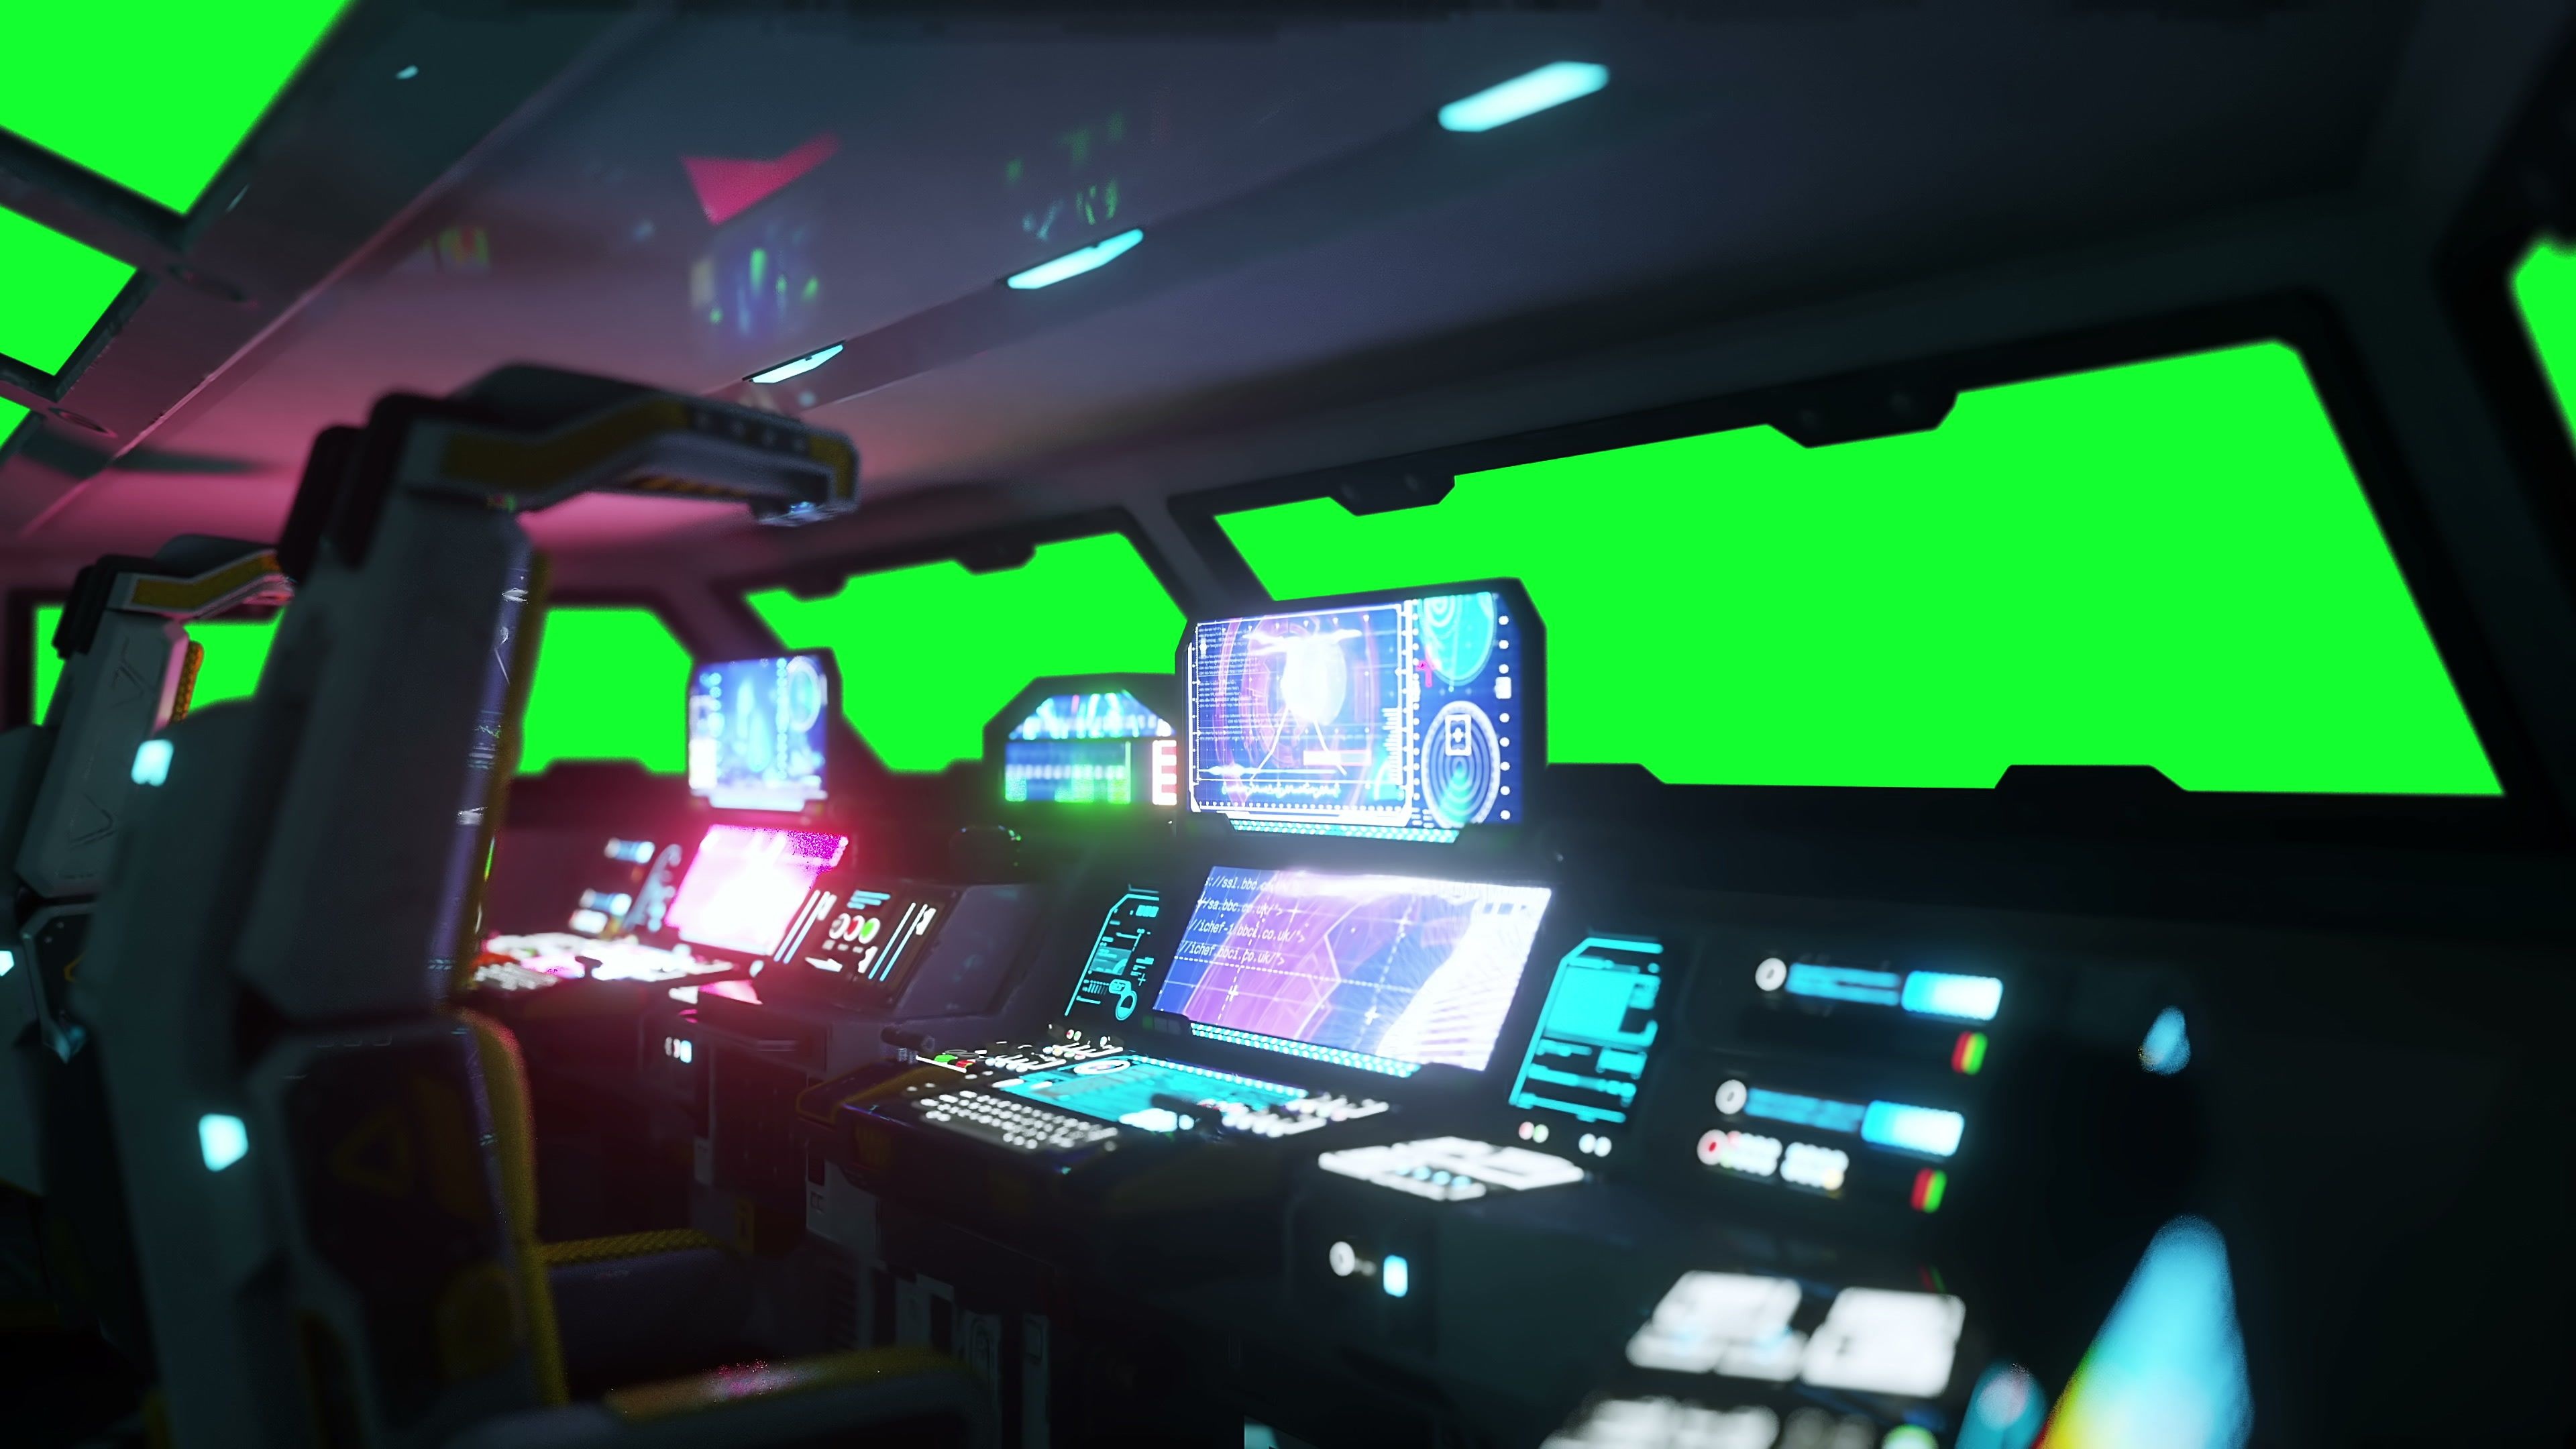 Green screen cockpit, Spacecraft control panel, Exciting sci-fi visuals, Futuristic experience, 3840x2160 4K Desktop